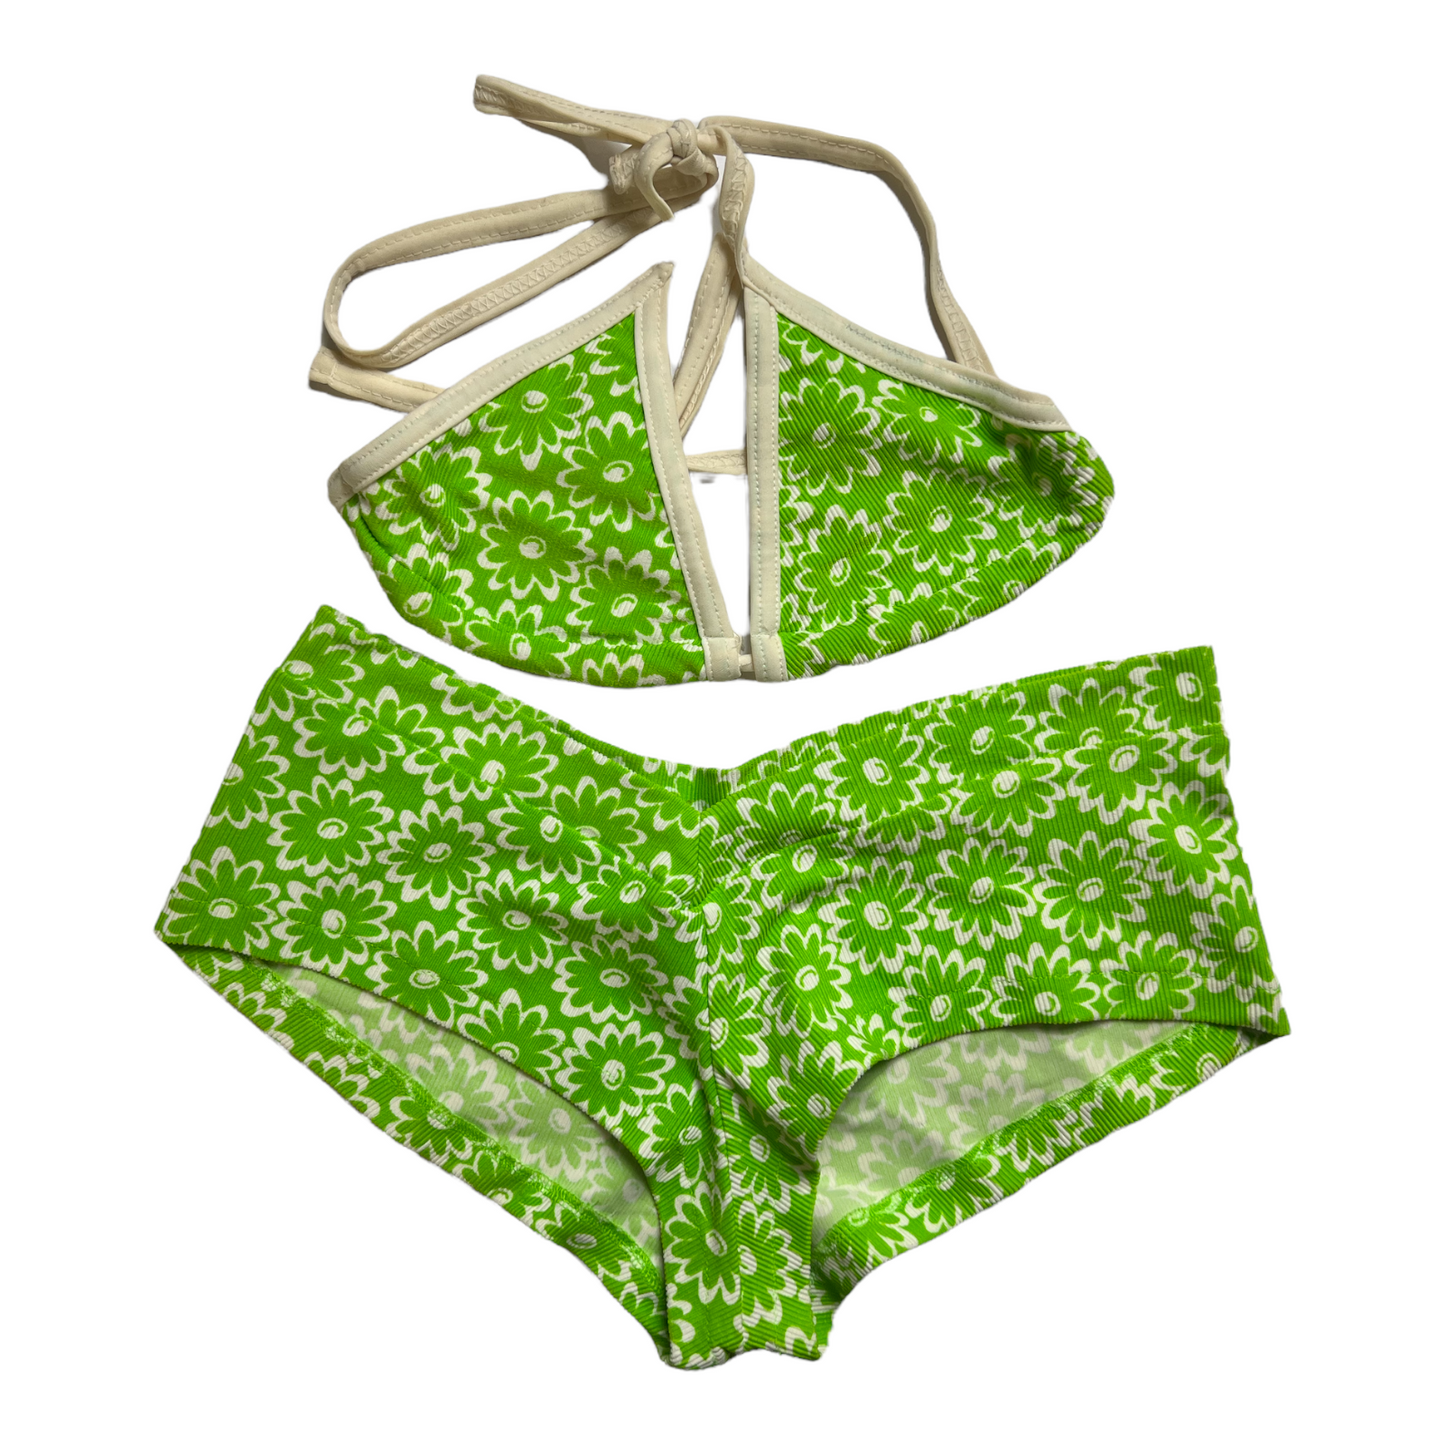 New Green/white String Bikini Top & Boy Short Swimsuit size S (SwimWear)